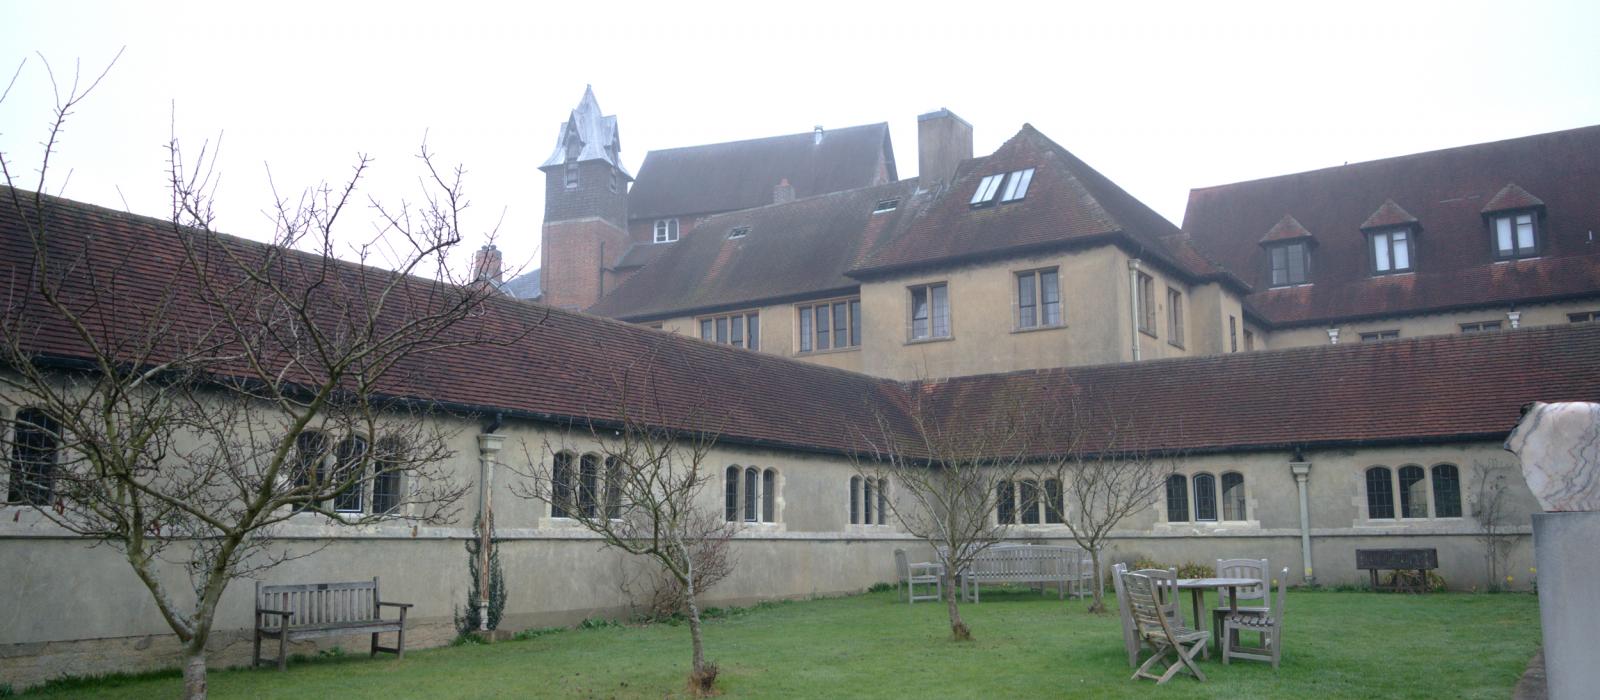 Cloisters Garden, St Stephen's House